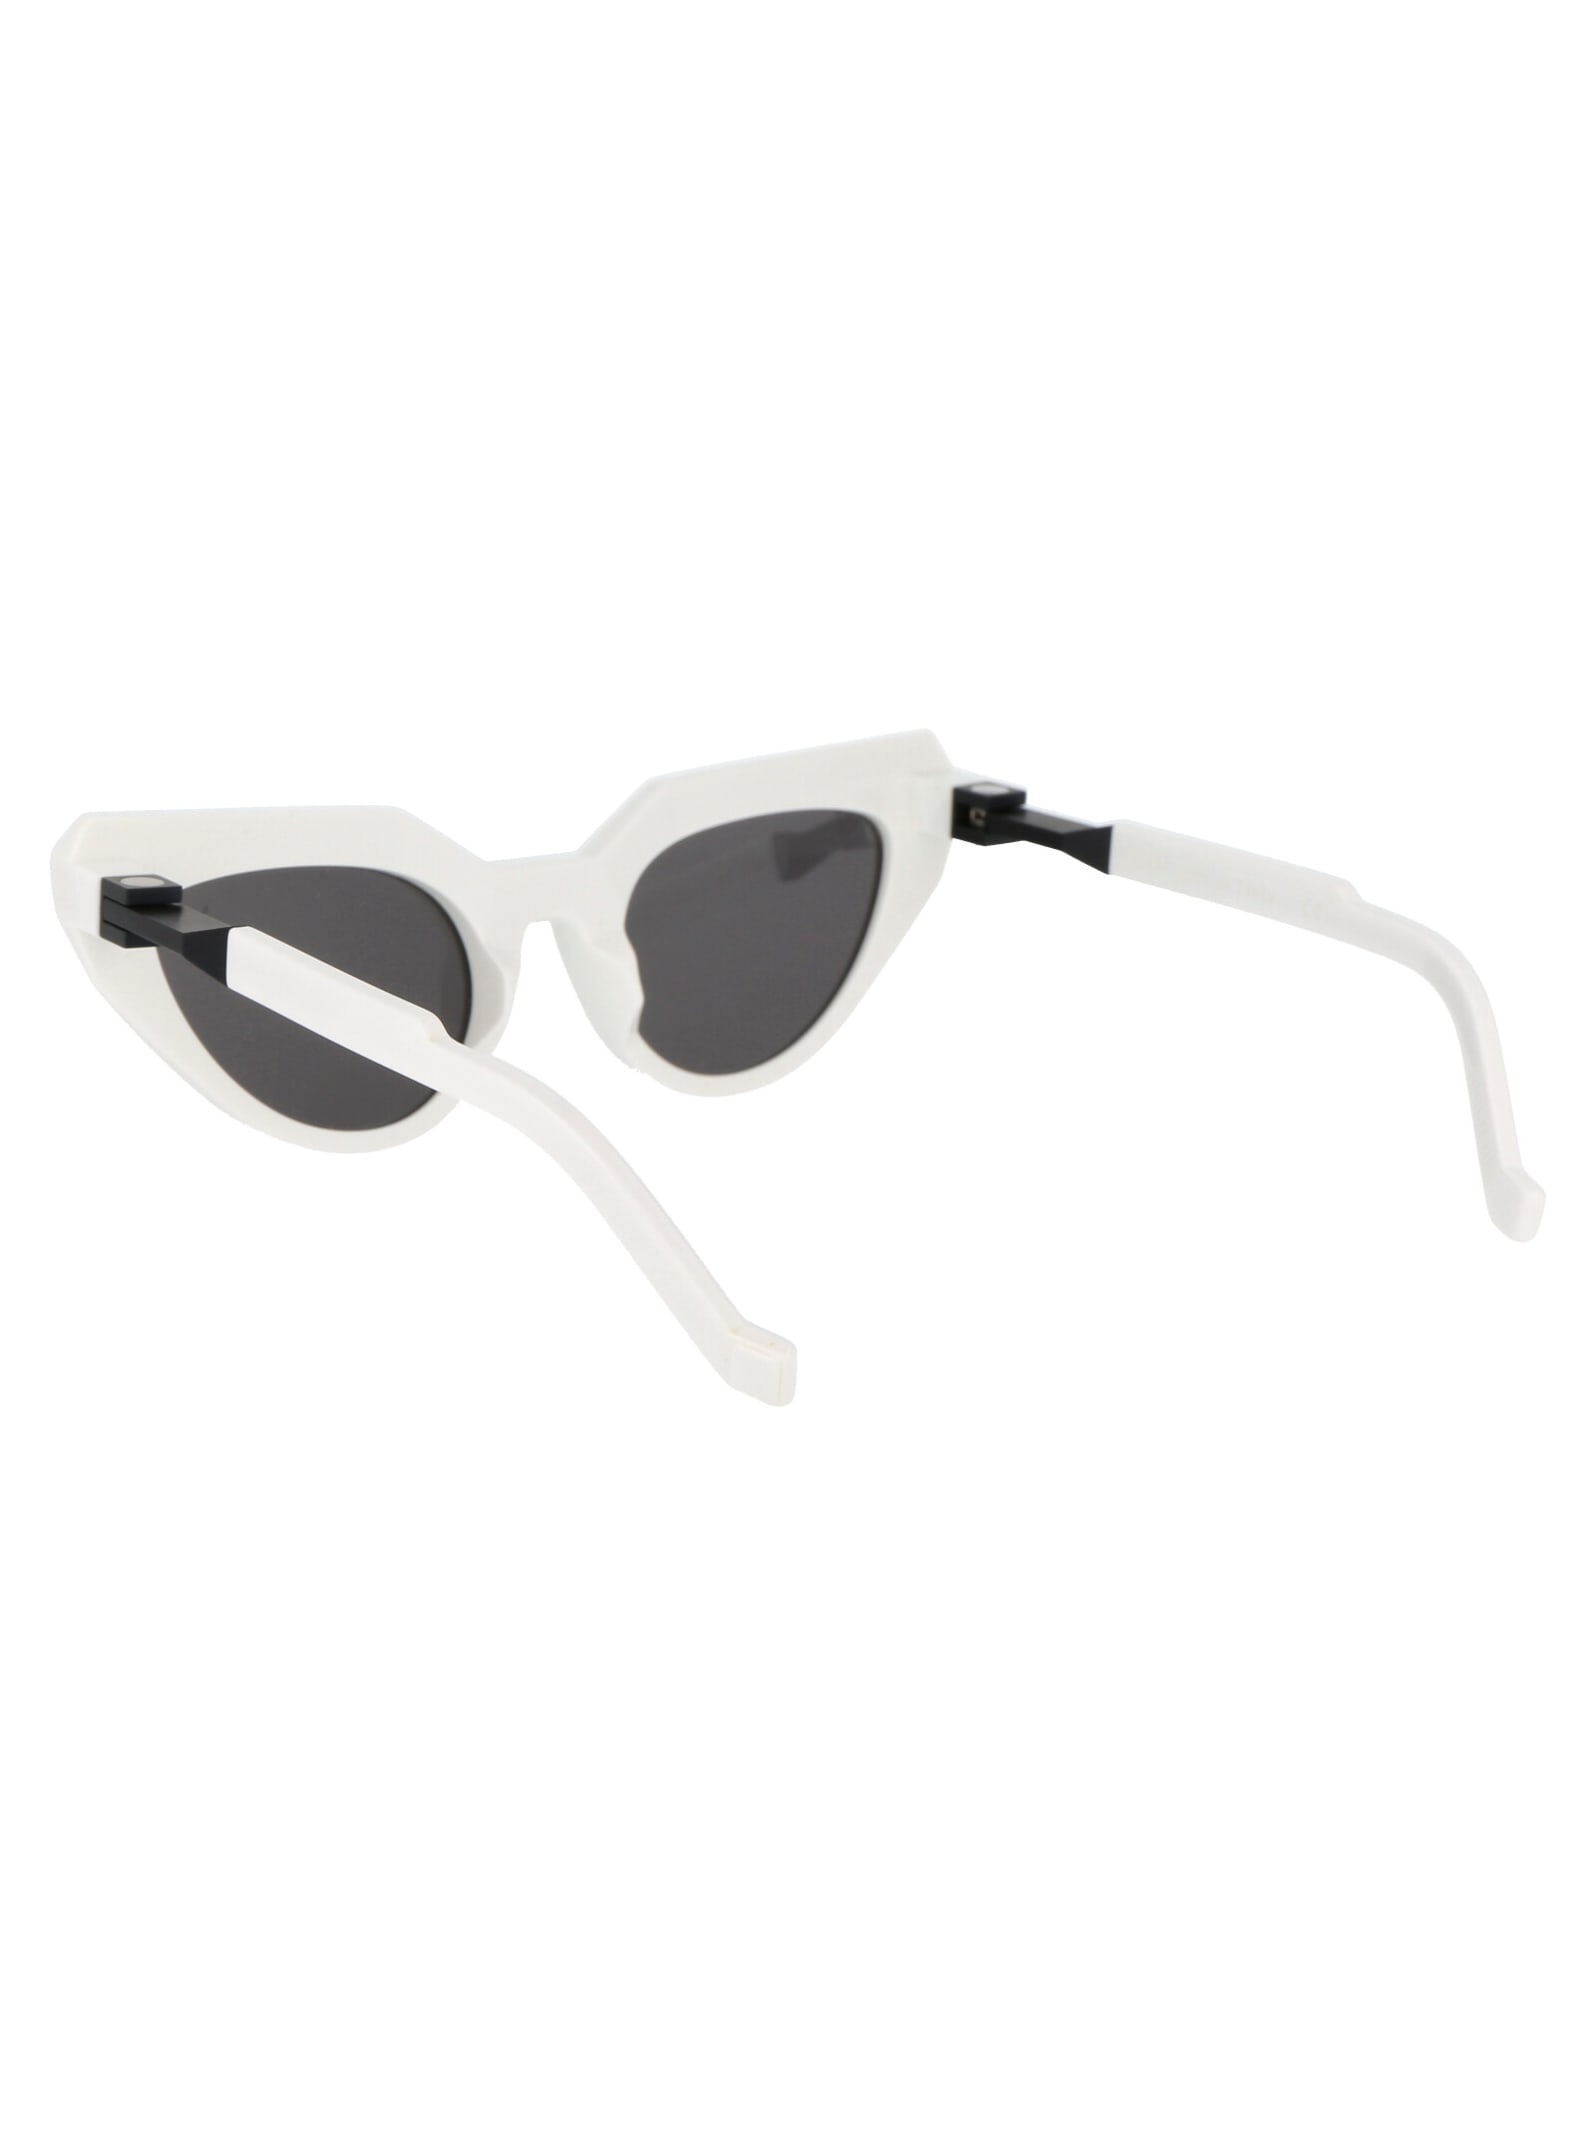 Shop Vava Bl0028 Sunglasses In White|black Flex Hinges|black Lenses